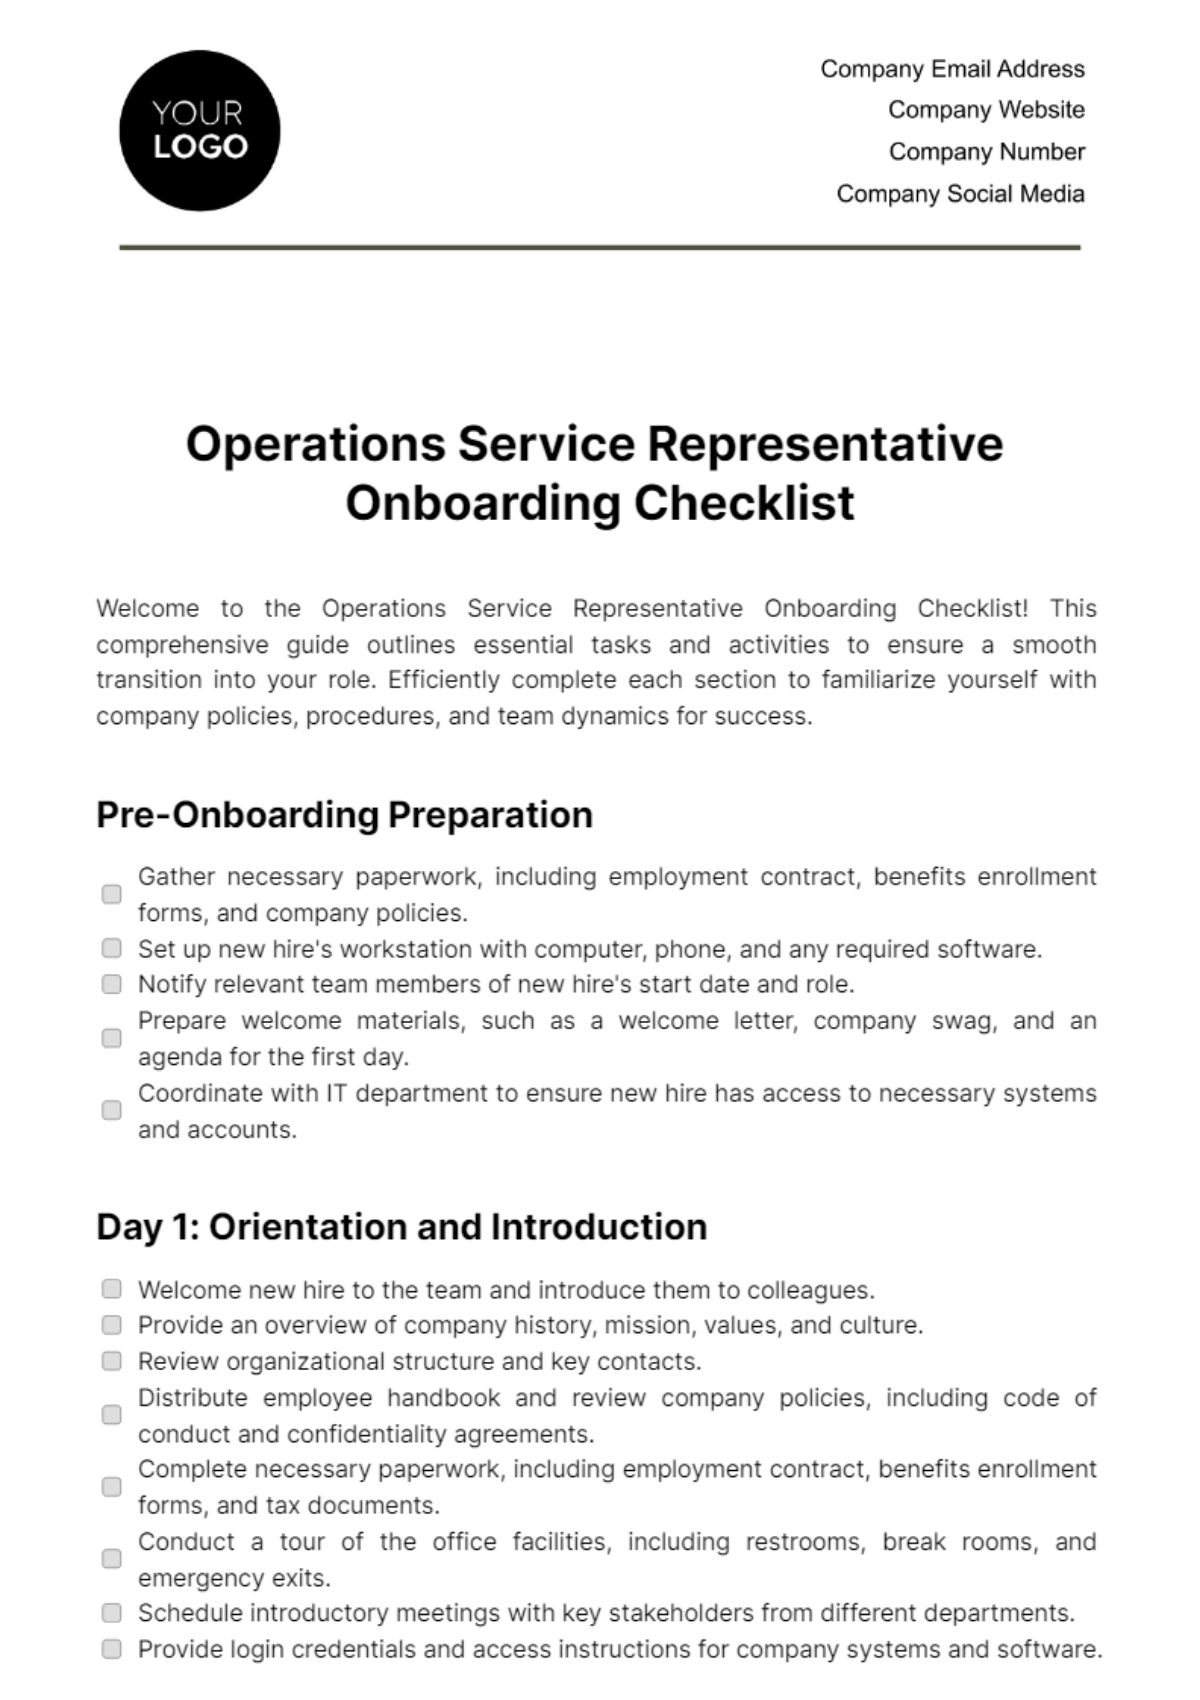 Operations Service Representative Onboarding Checklist Template